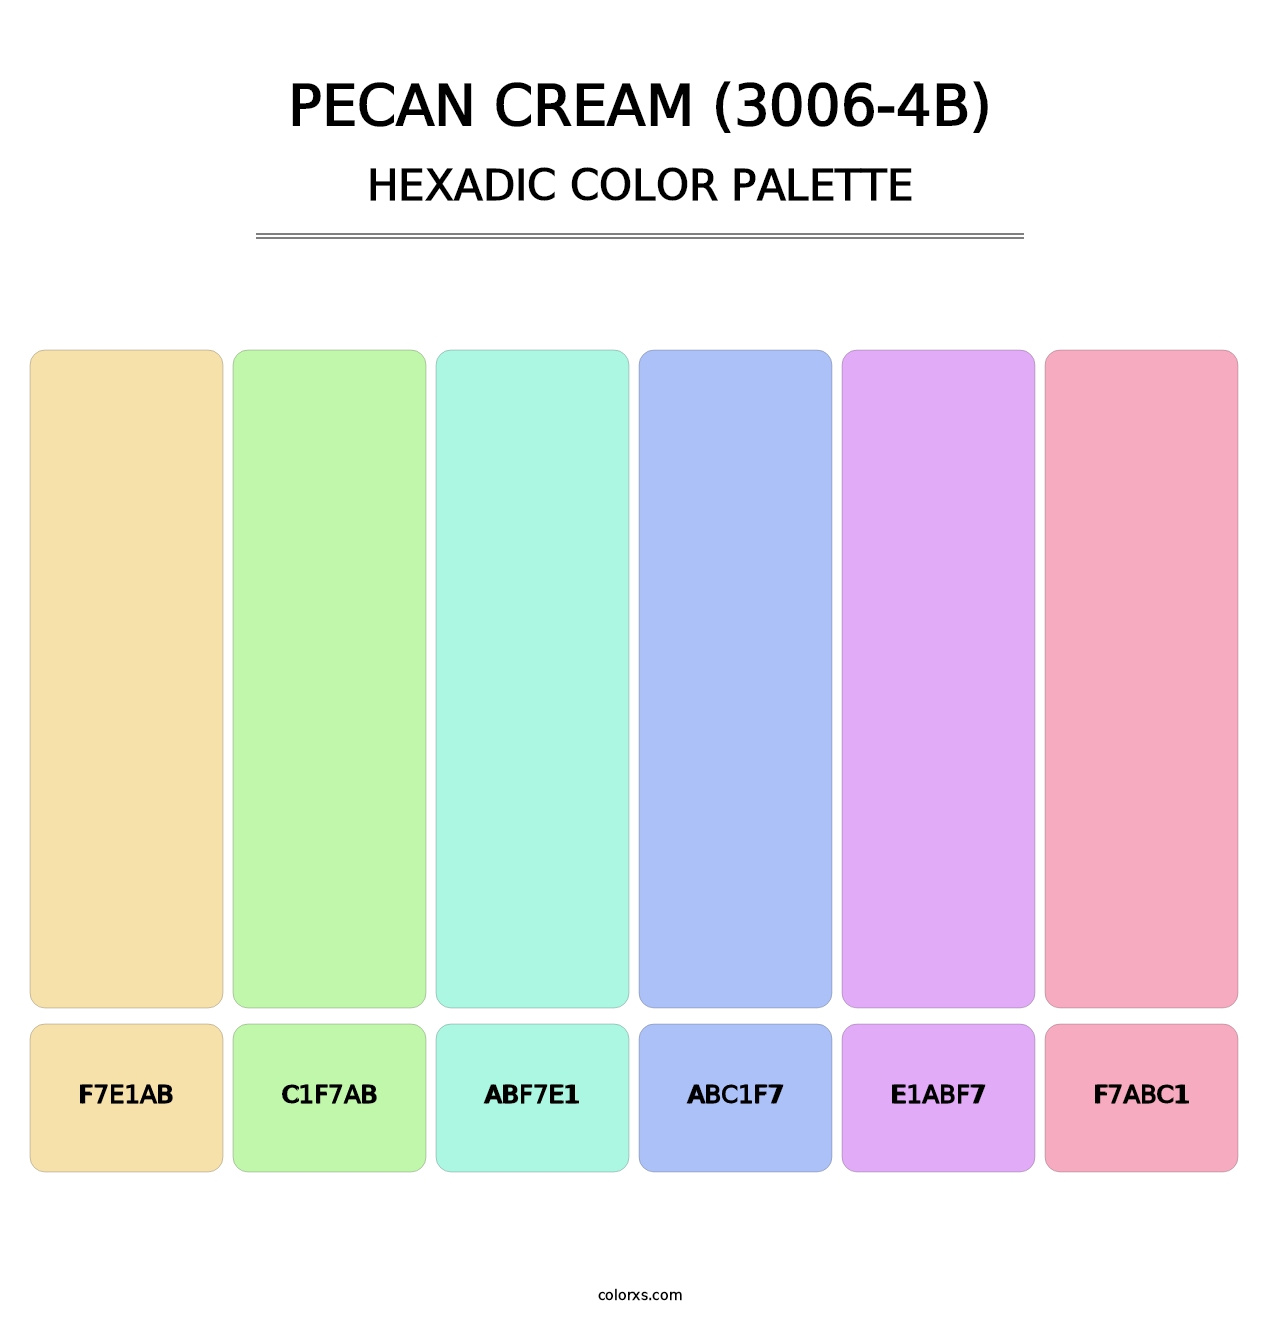 Pecan Cream (3006-4B) - Hexadic Color Palette